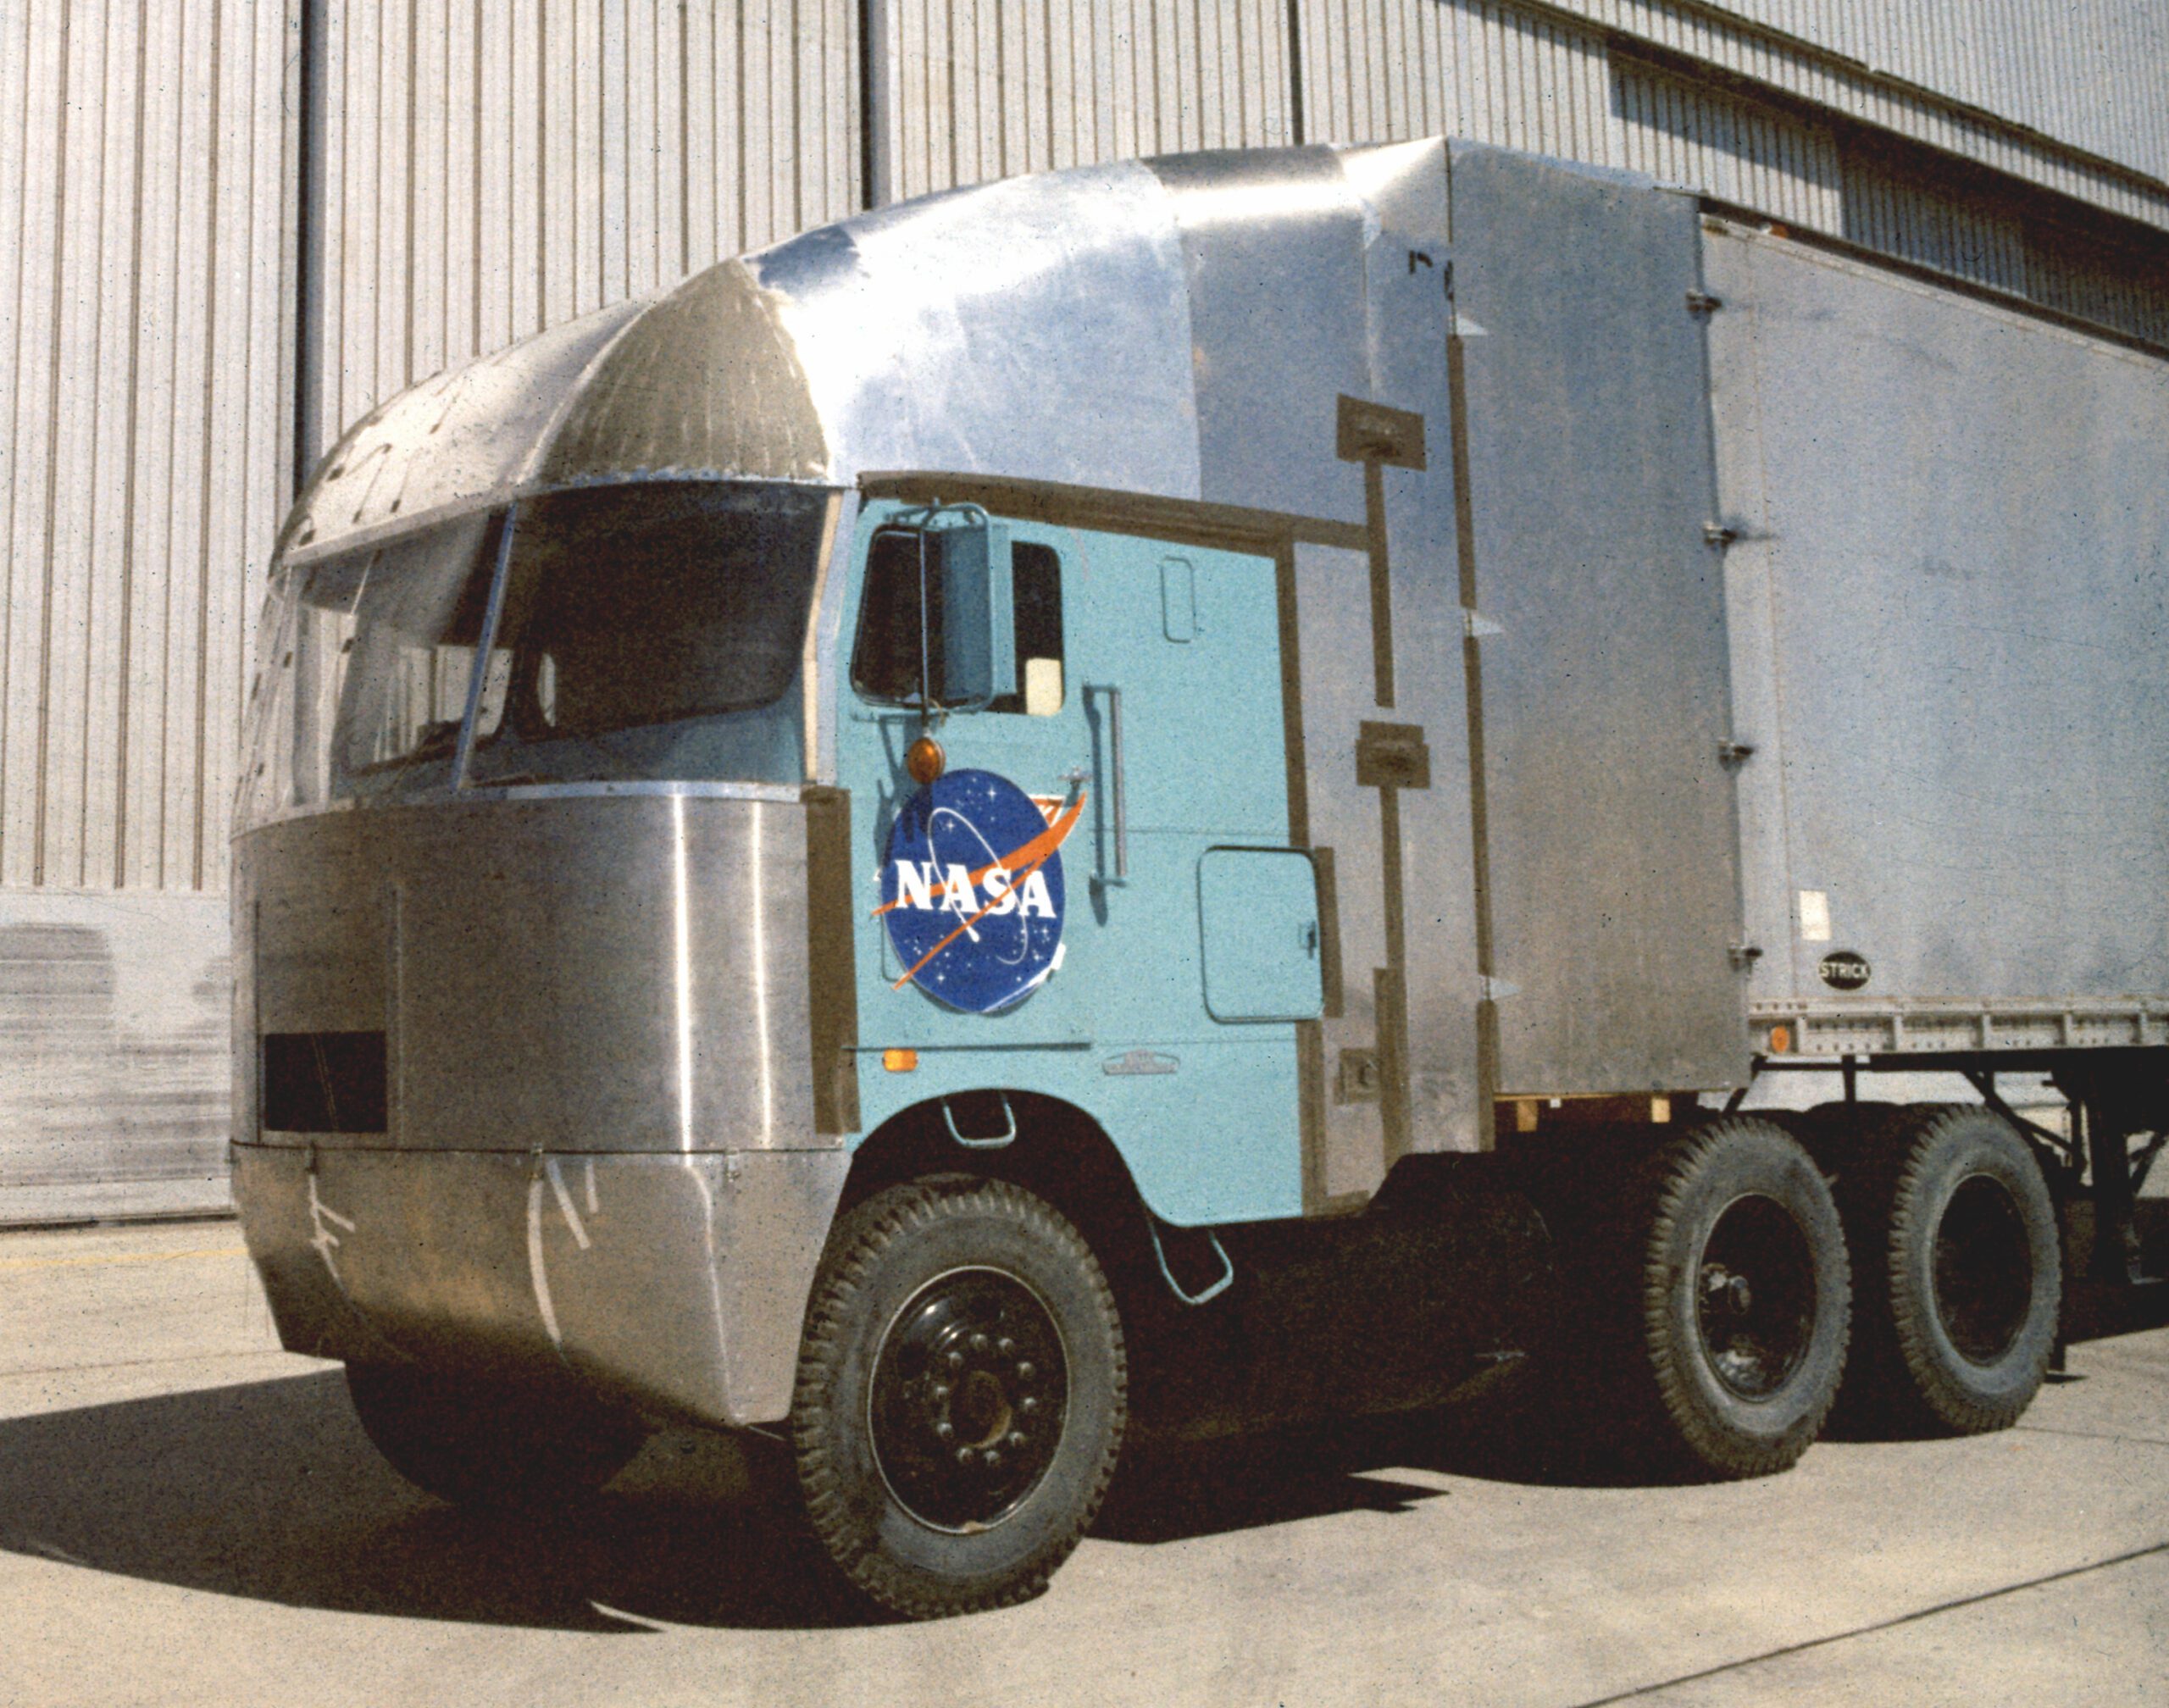 NASA Image of Aerodynamic Vehicle Design